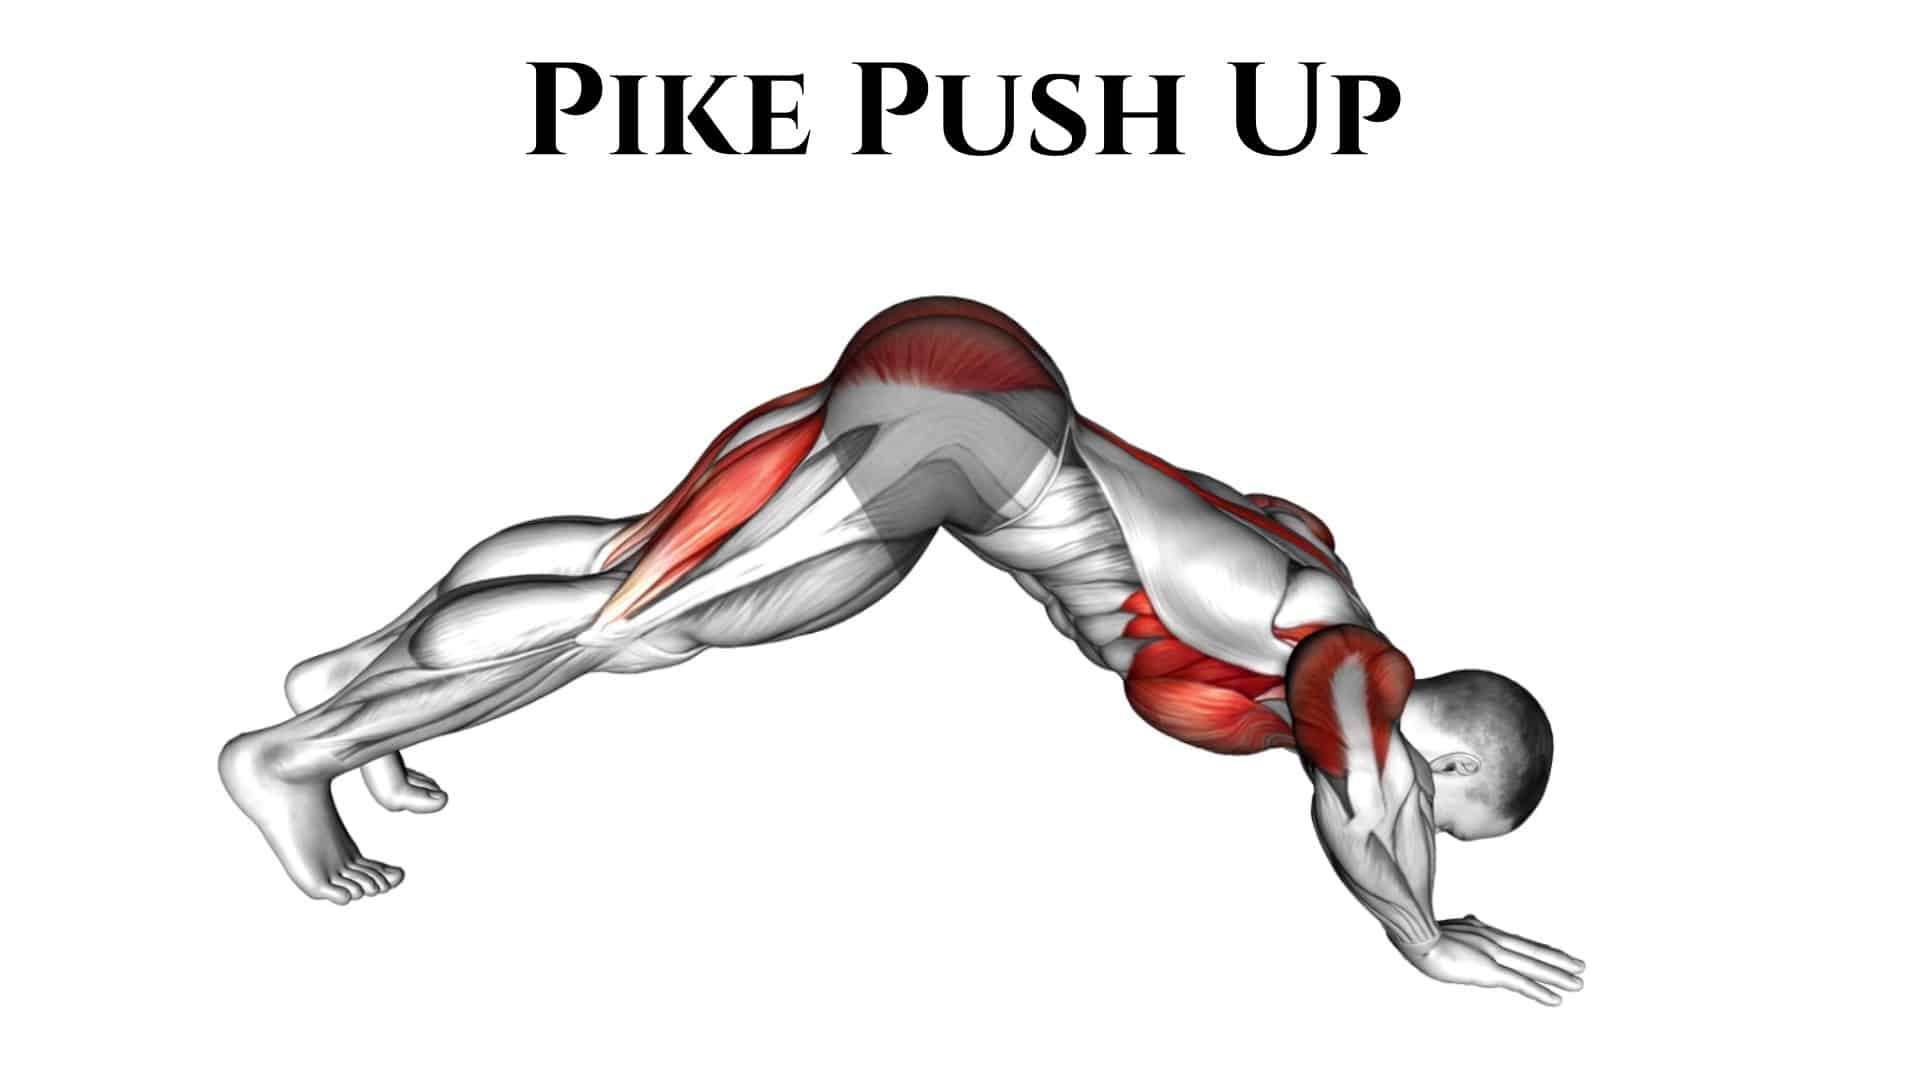 Pike Push Up.